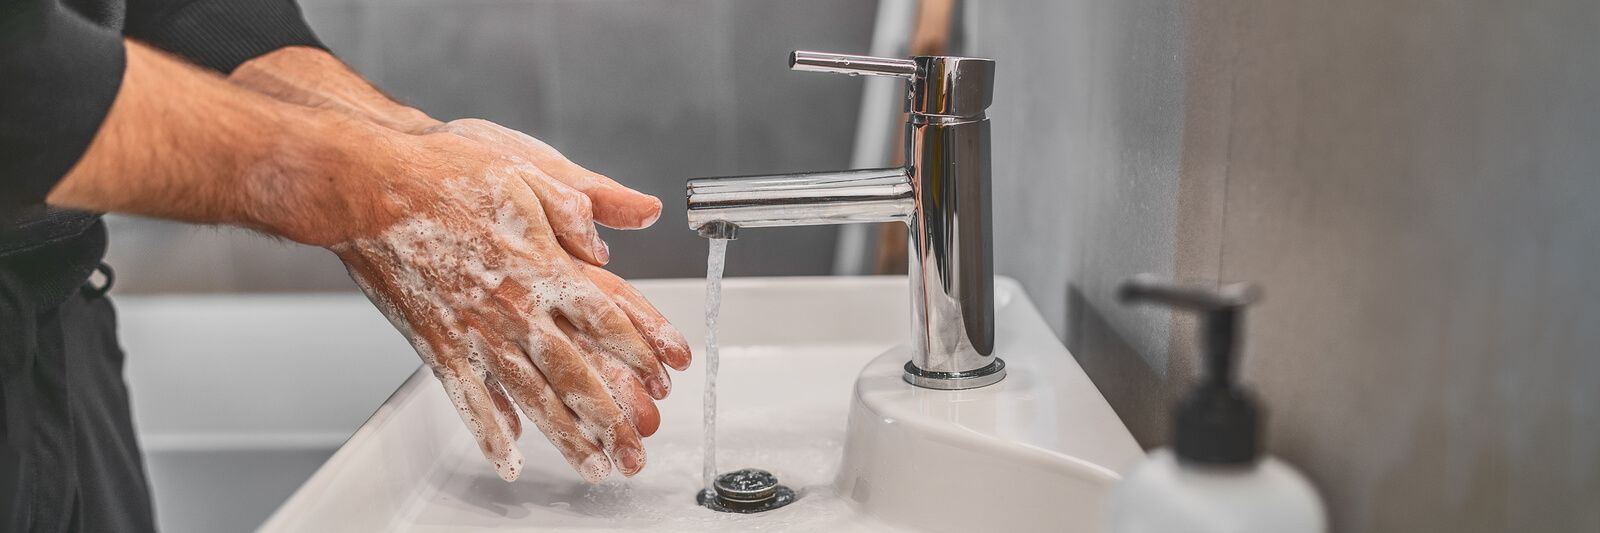 washing hands at sink because of coronavirus